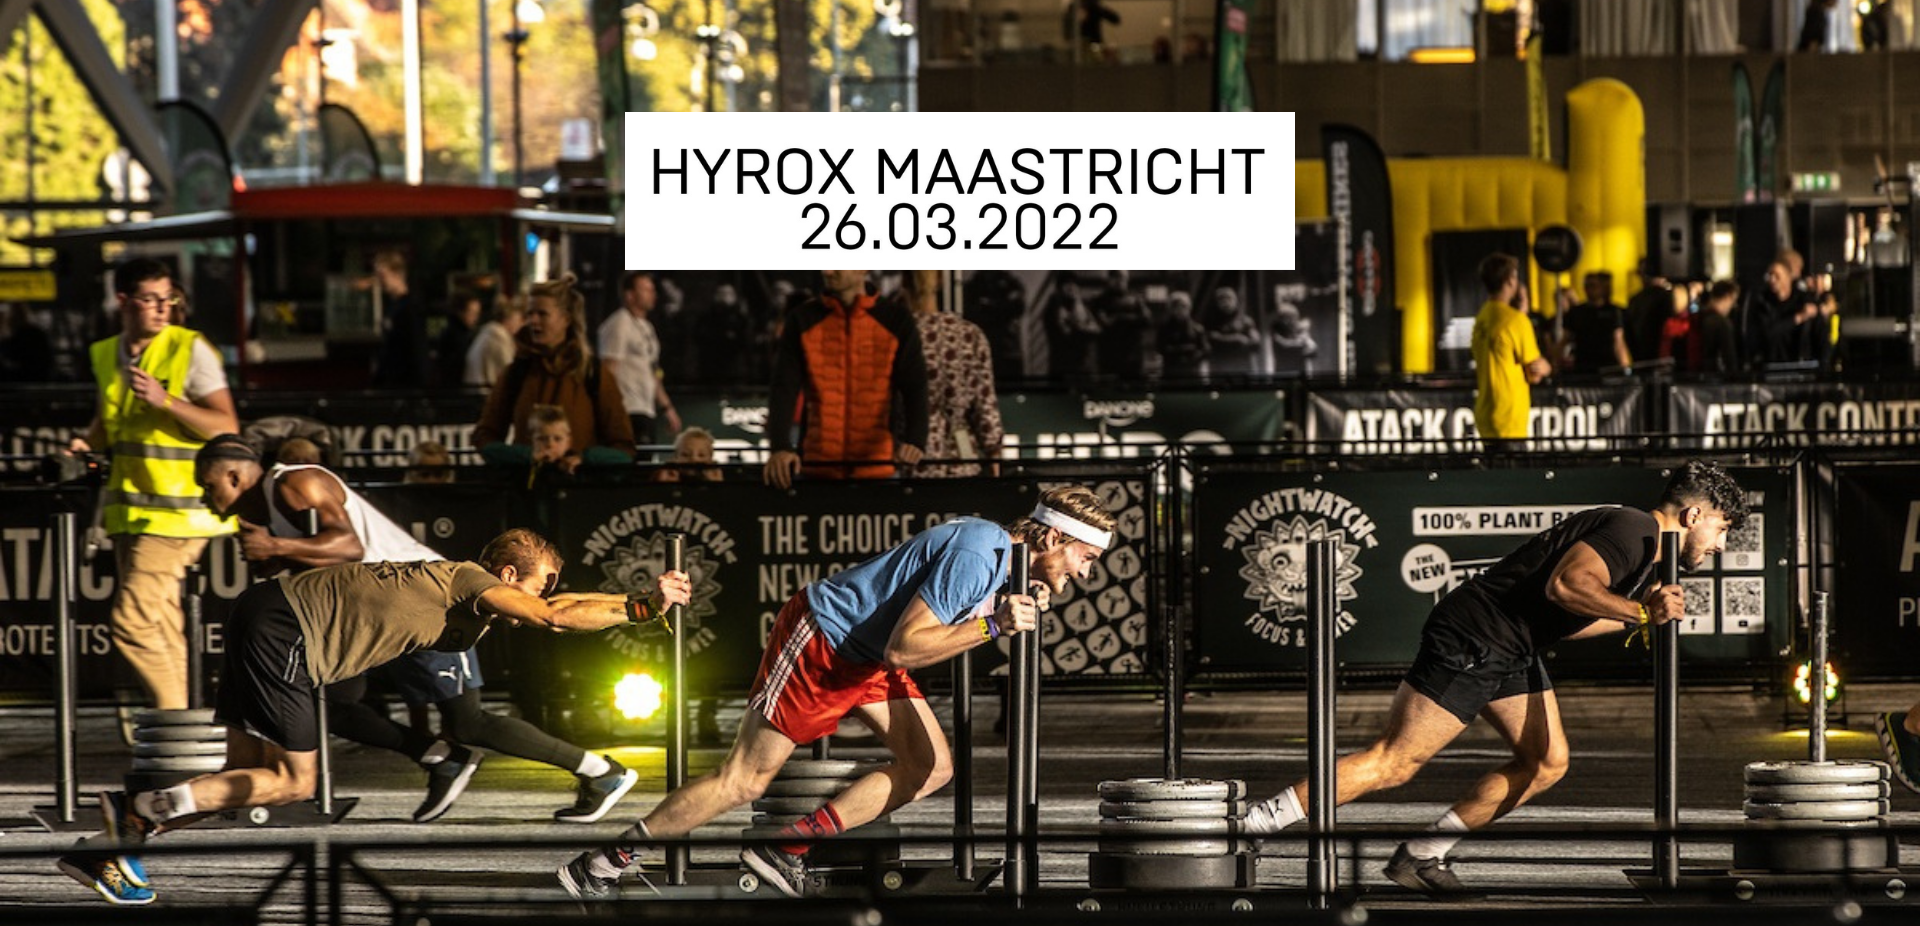 Neues vom HPM-Partner HYROX: 21. Januar 2023 Maastricht!